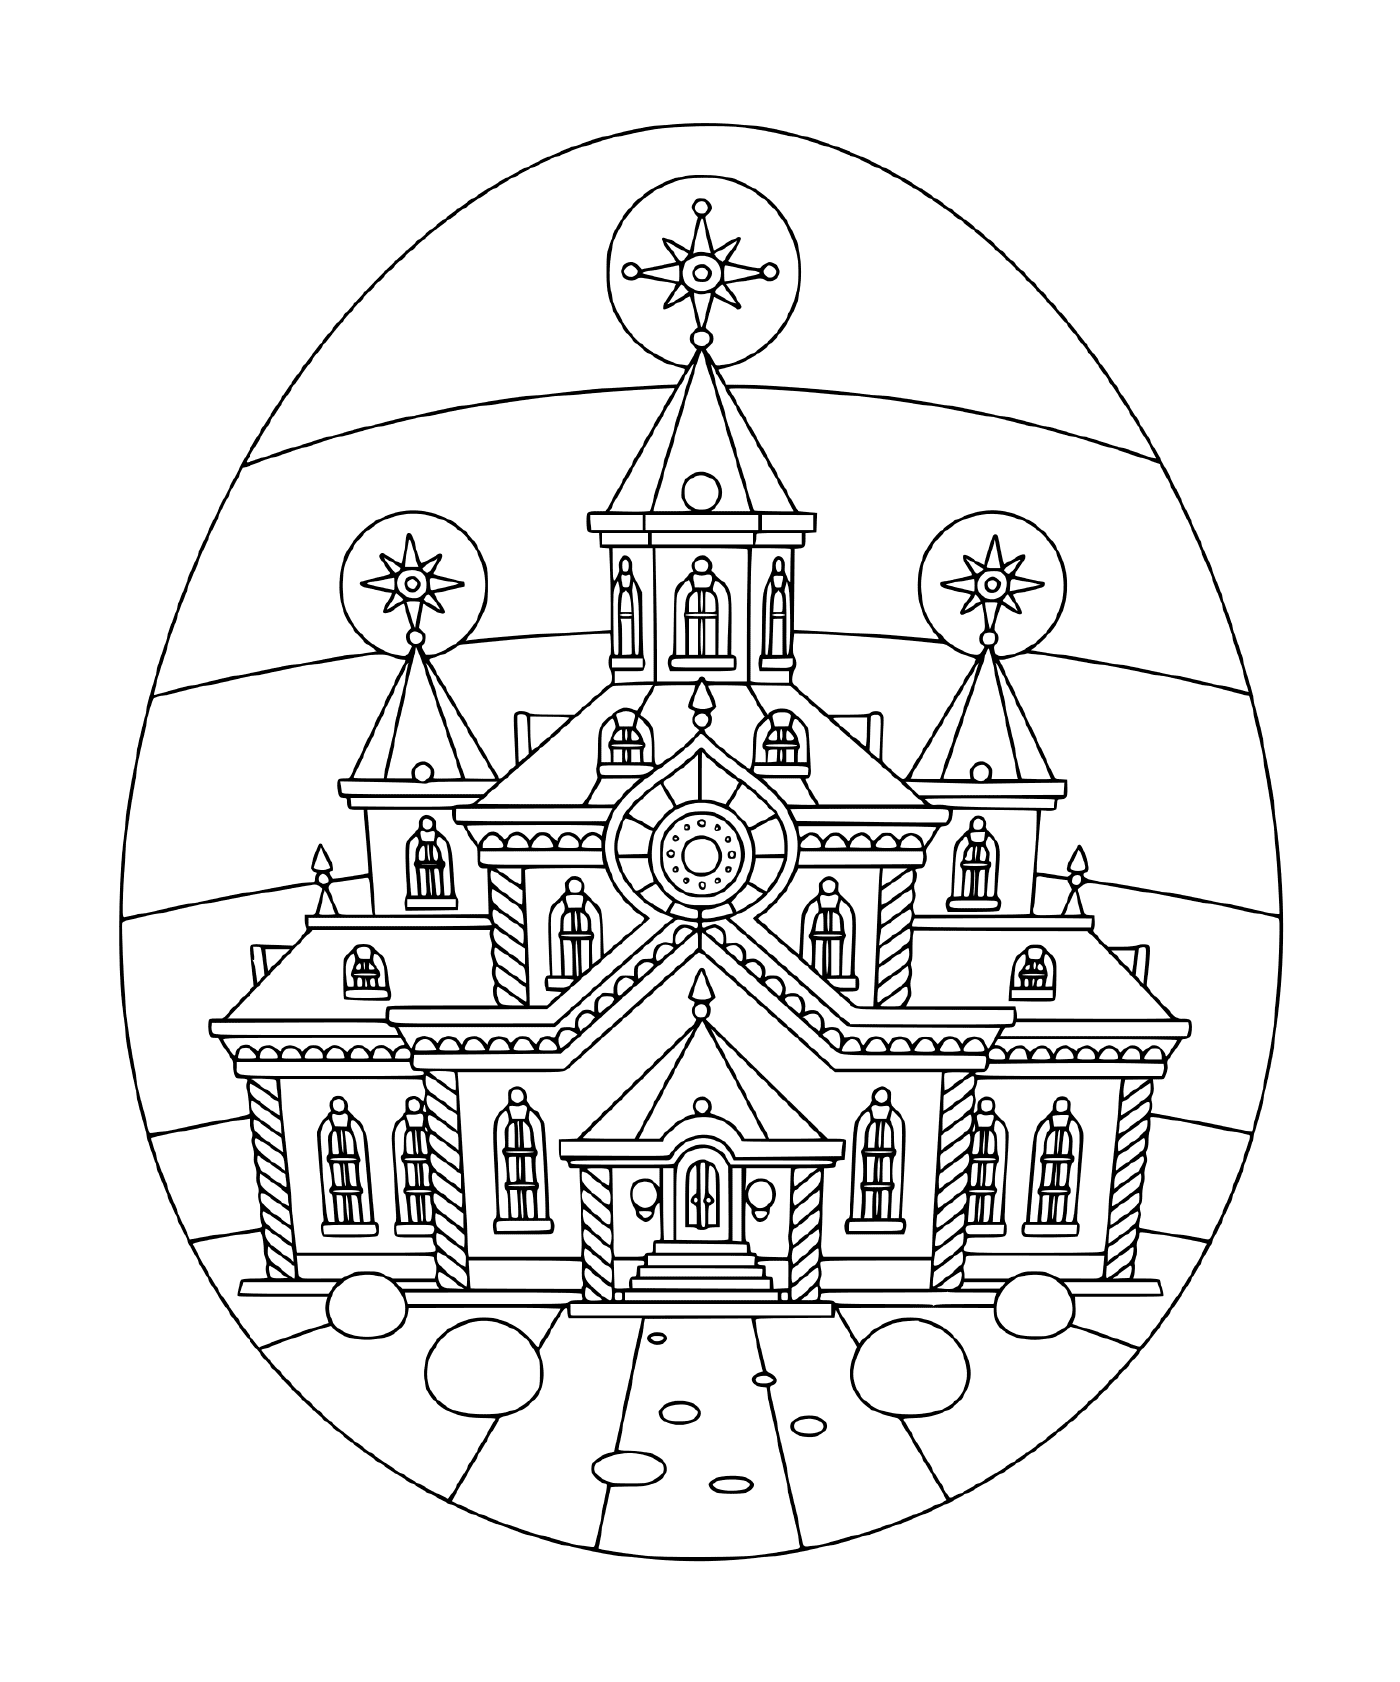  Church with a clock 